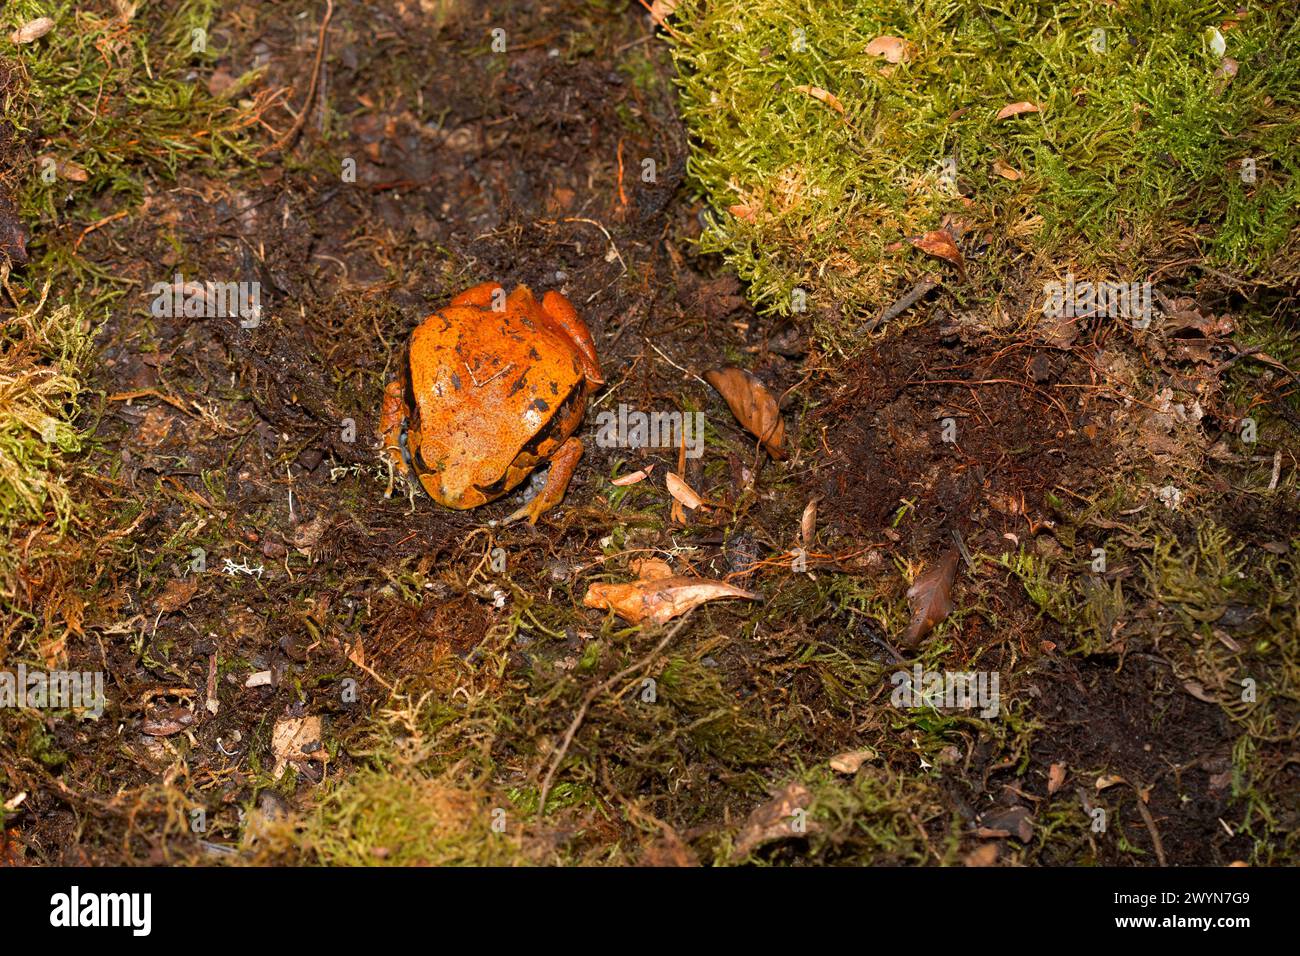 (Dyscophus Antongilii) in natura, rana di pomodoro arancione Madagascar, Dyscophus antongilii, camminando per terra. grande rana rossa-arancione su sfondo Foto Stock